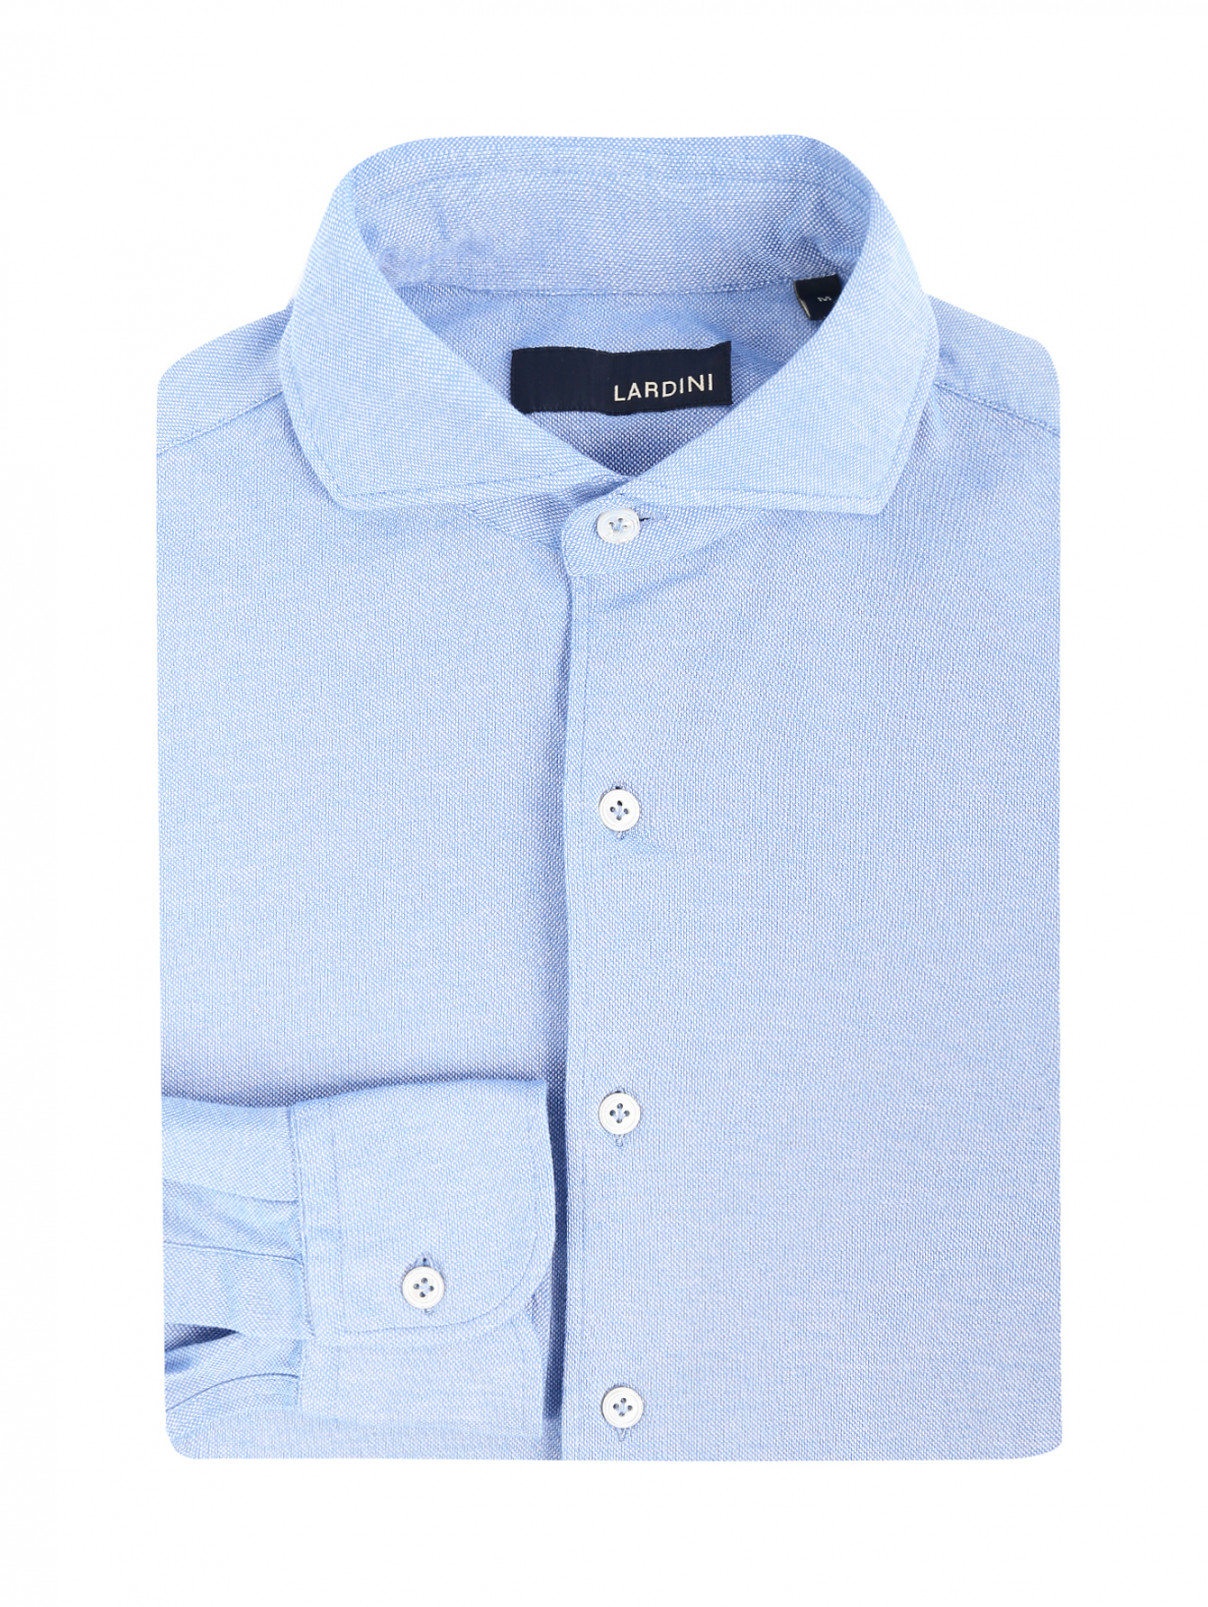 Рубашка из хлопка LARDINI  –  Общий вид  – Цвет:  Синий